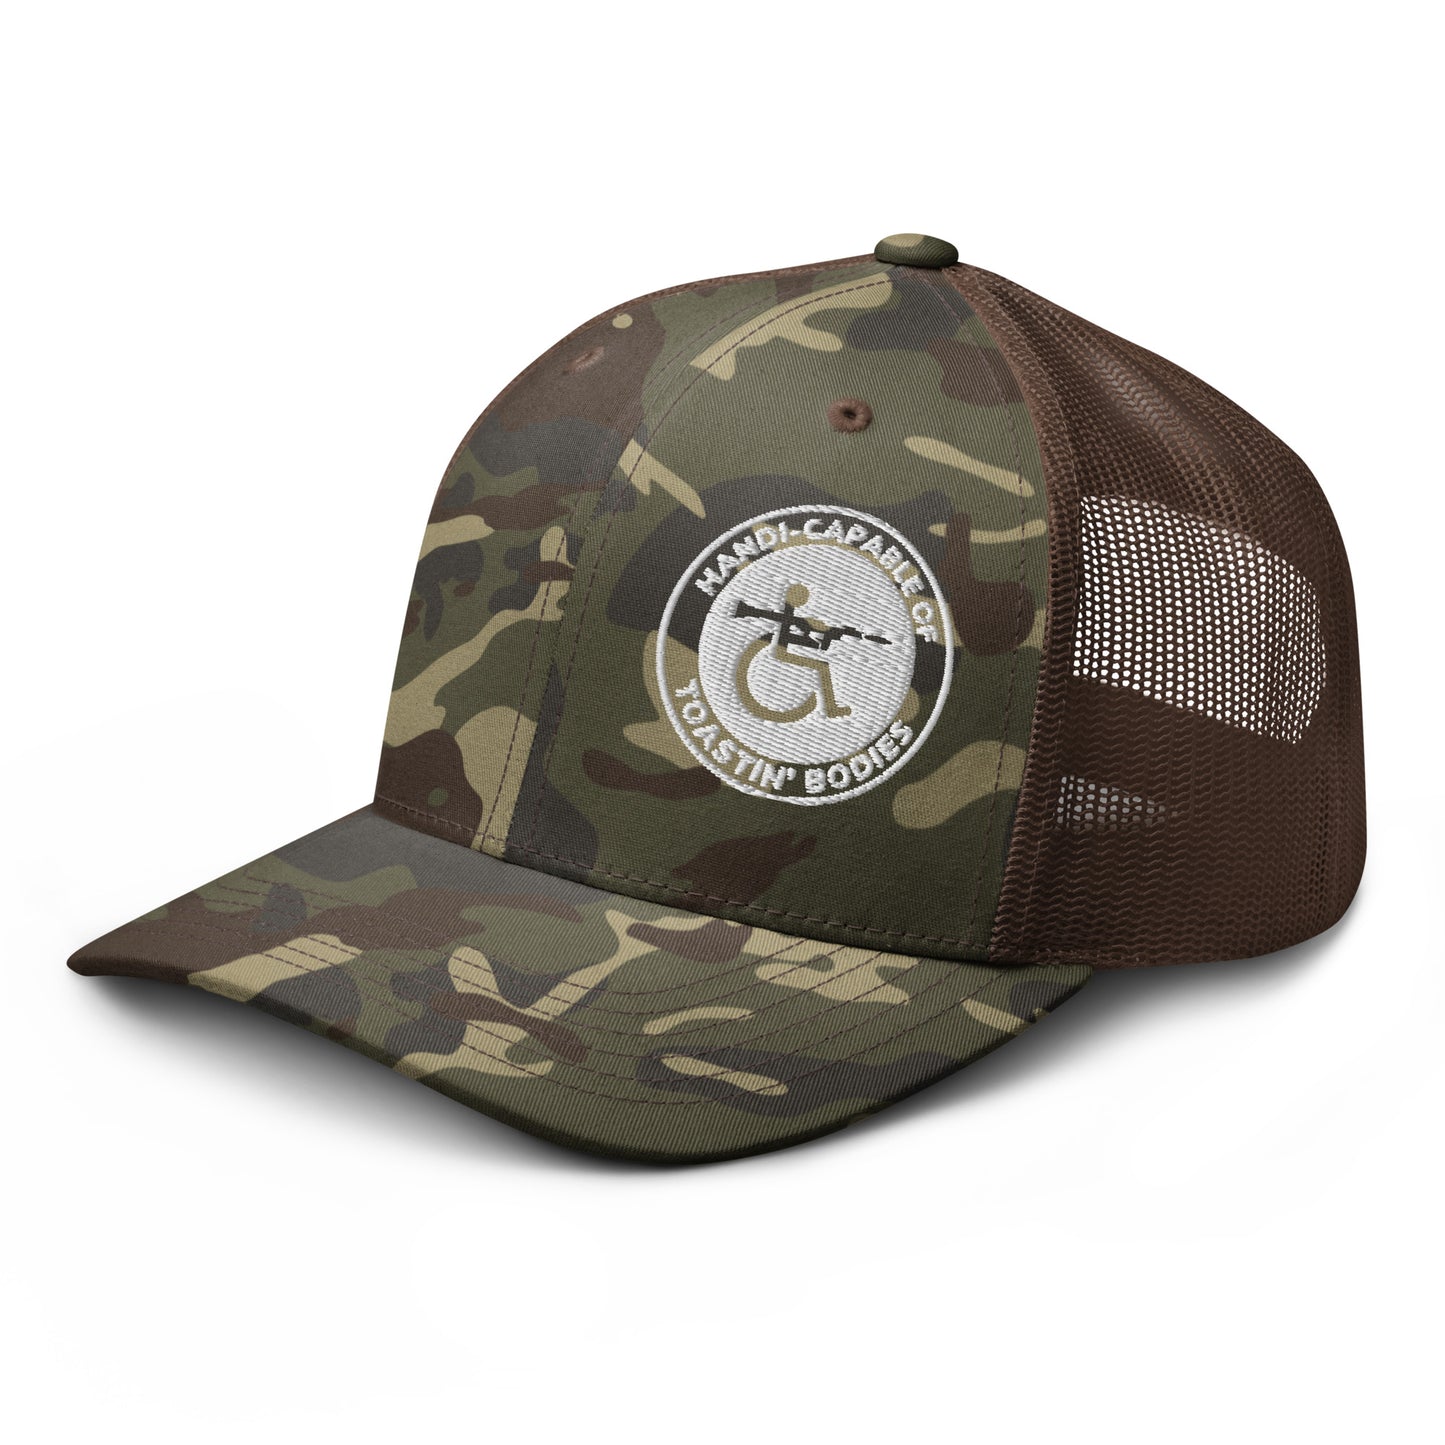 Handi-Capable Camouflage trucker hat